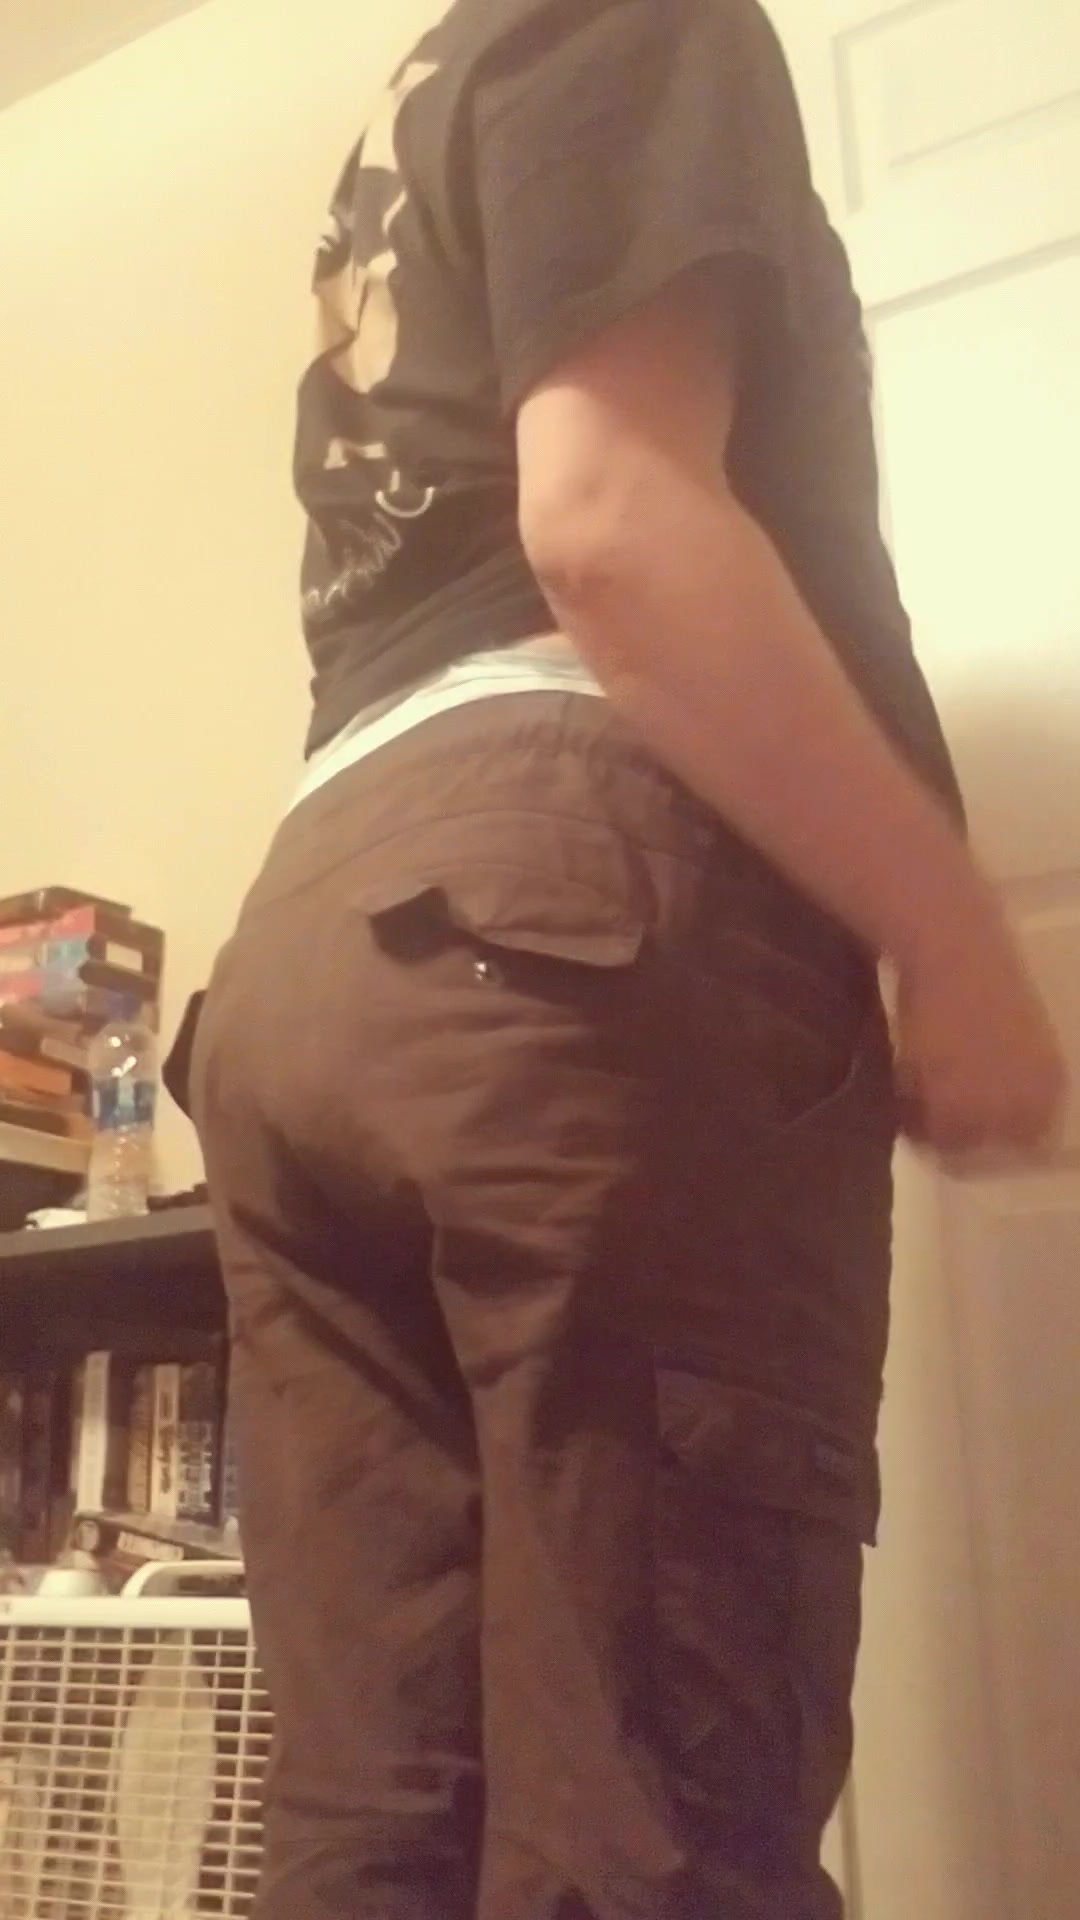 Diaper boy loads his pants